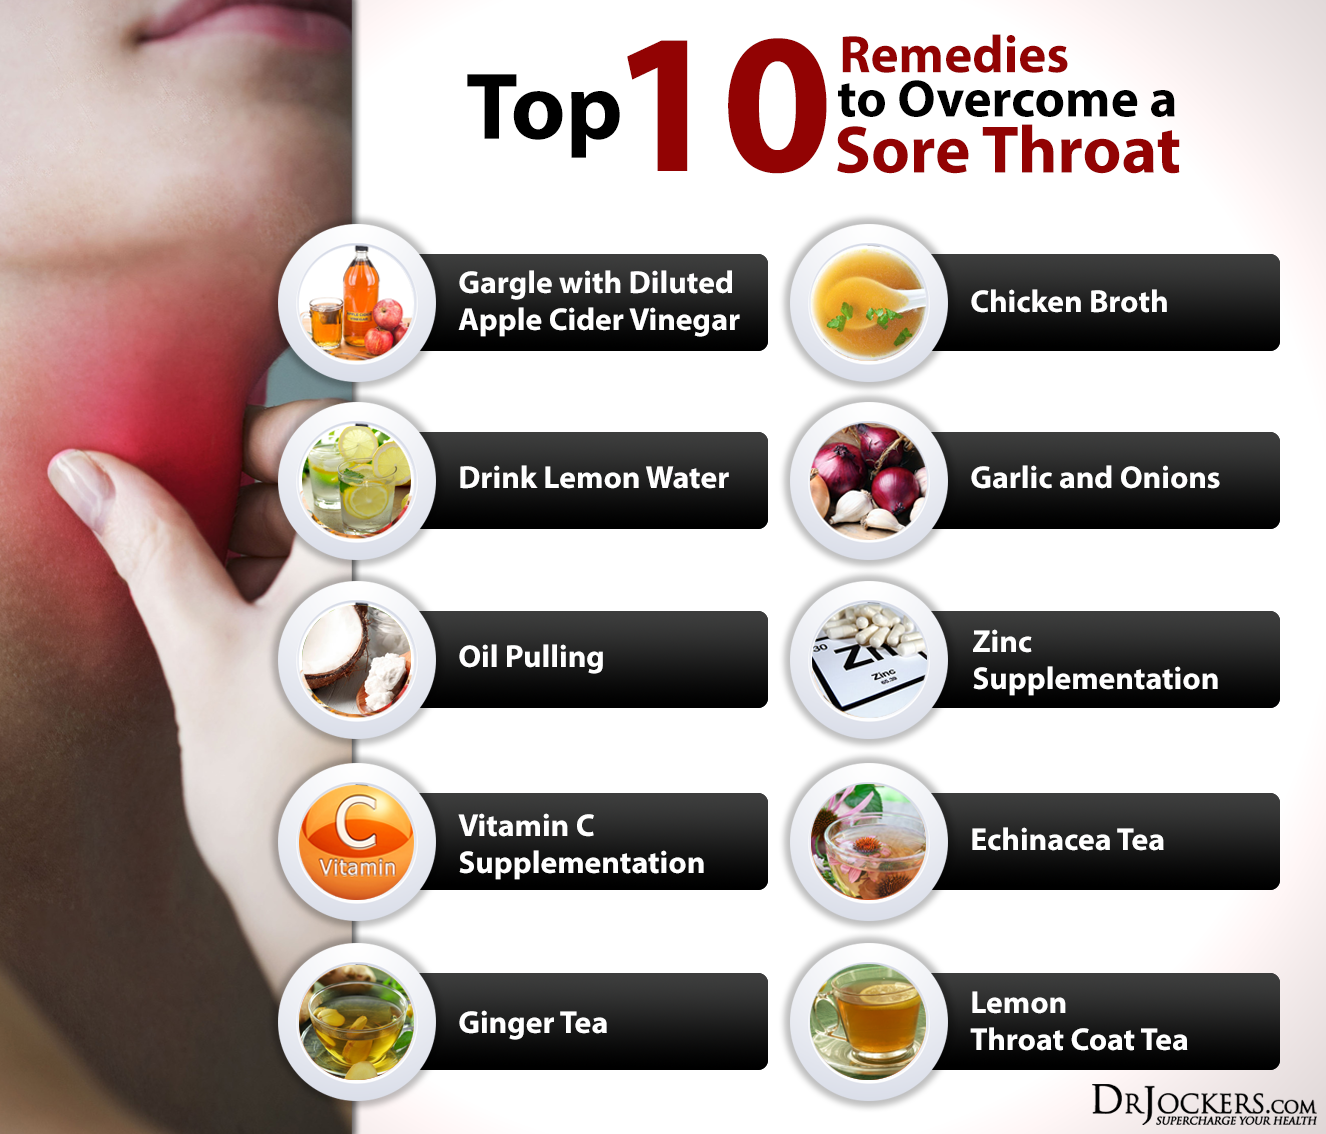 Top 10 Ways to Overcome a Sore Throat